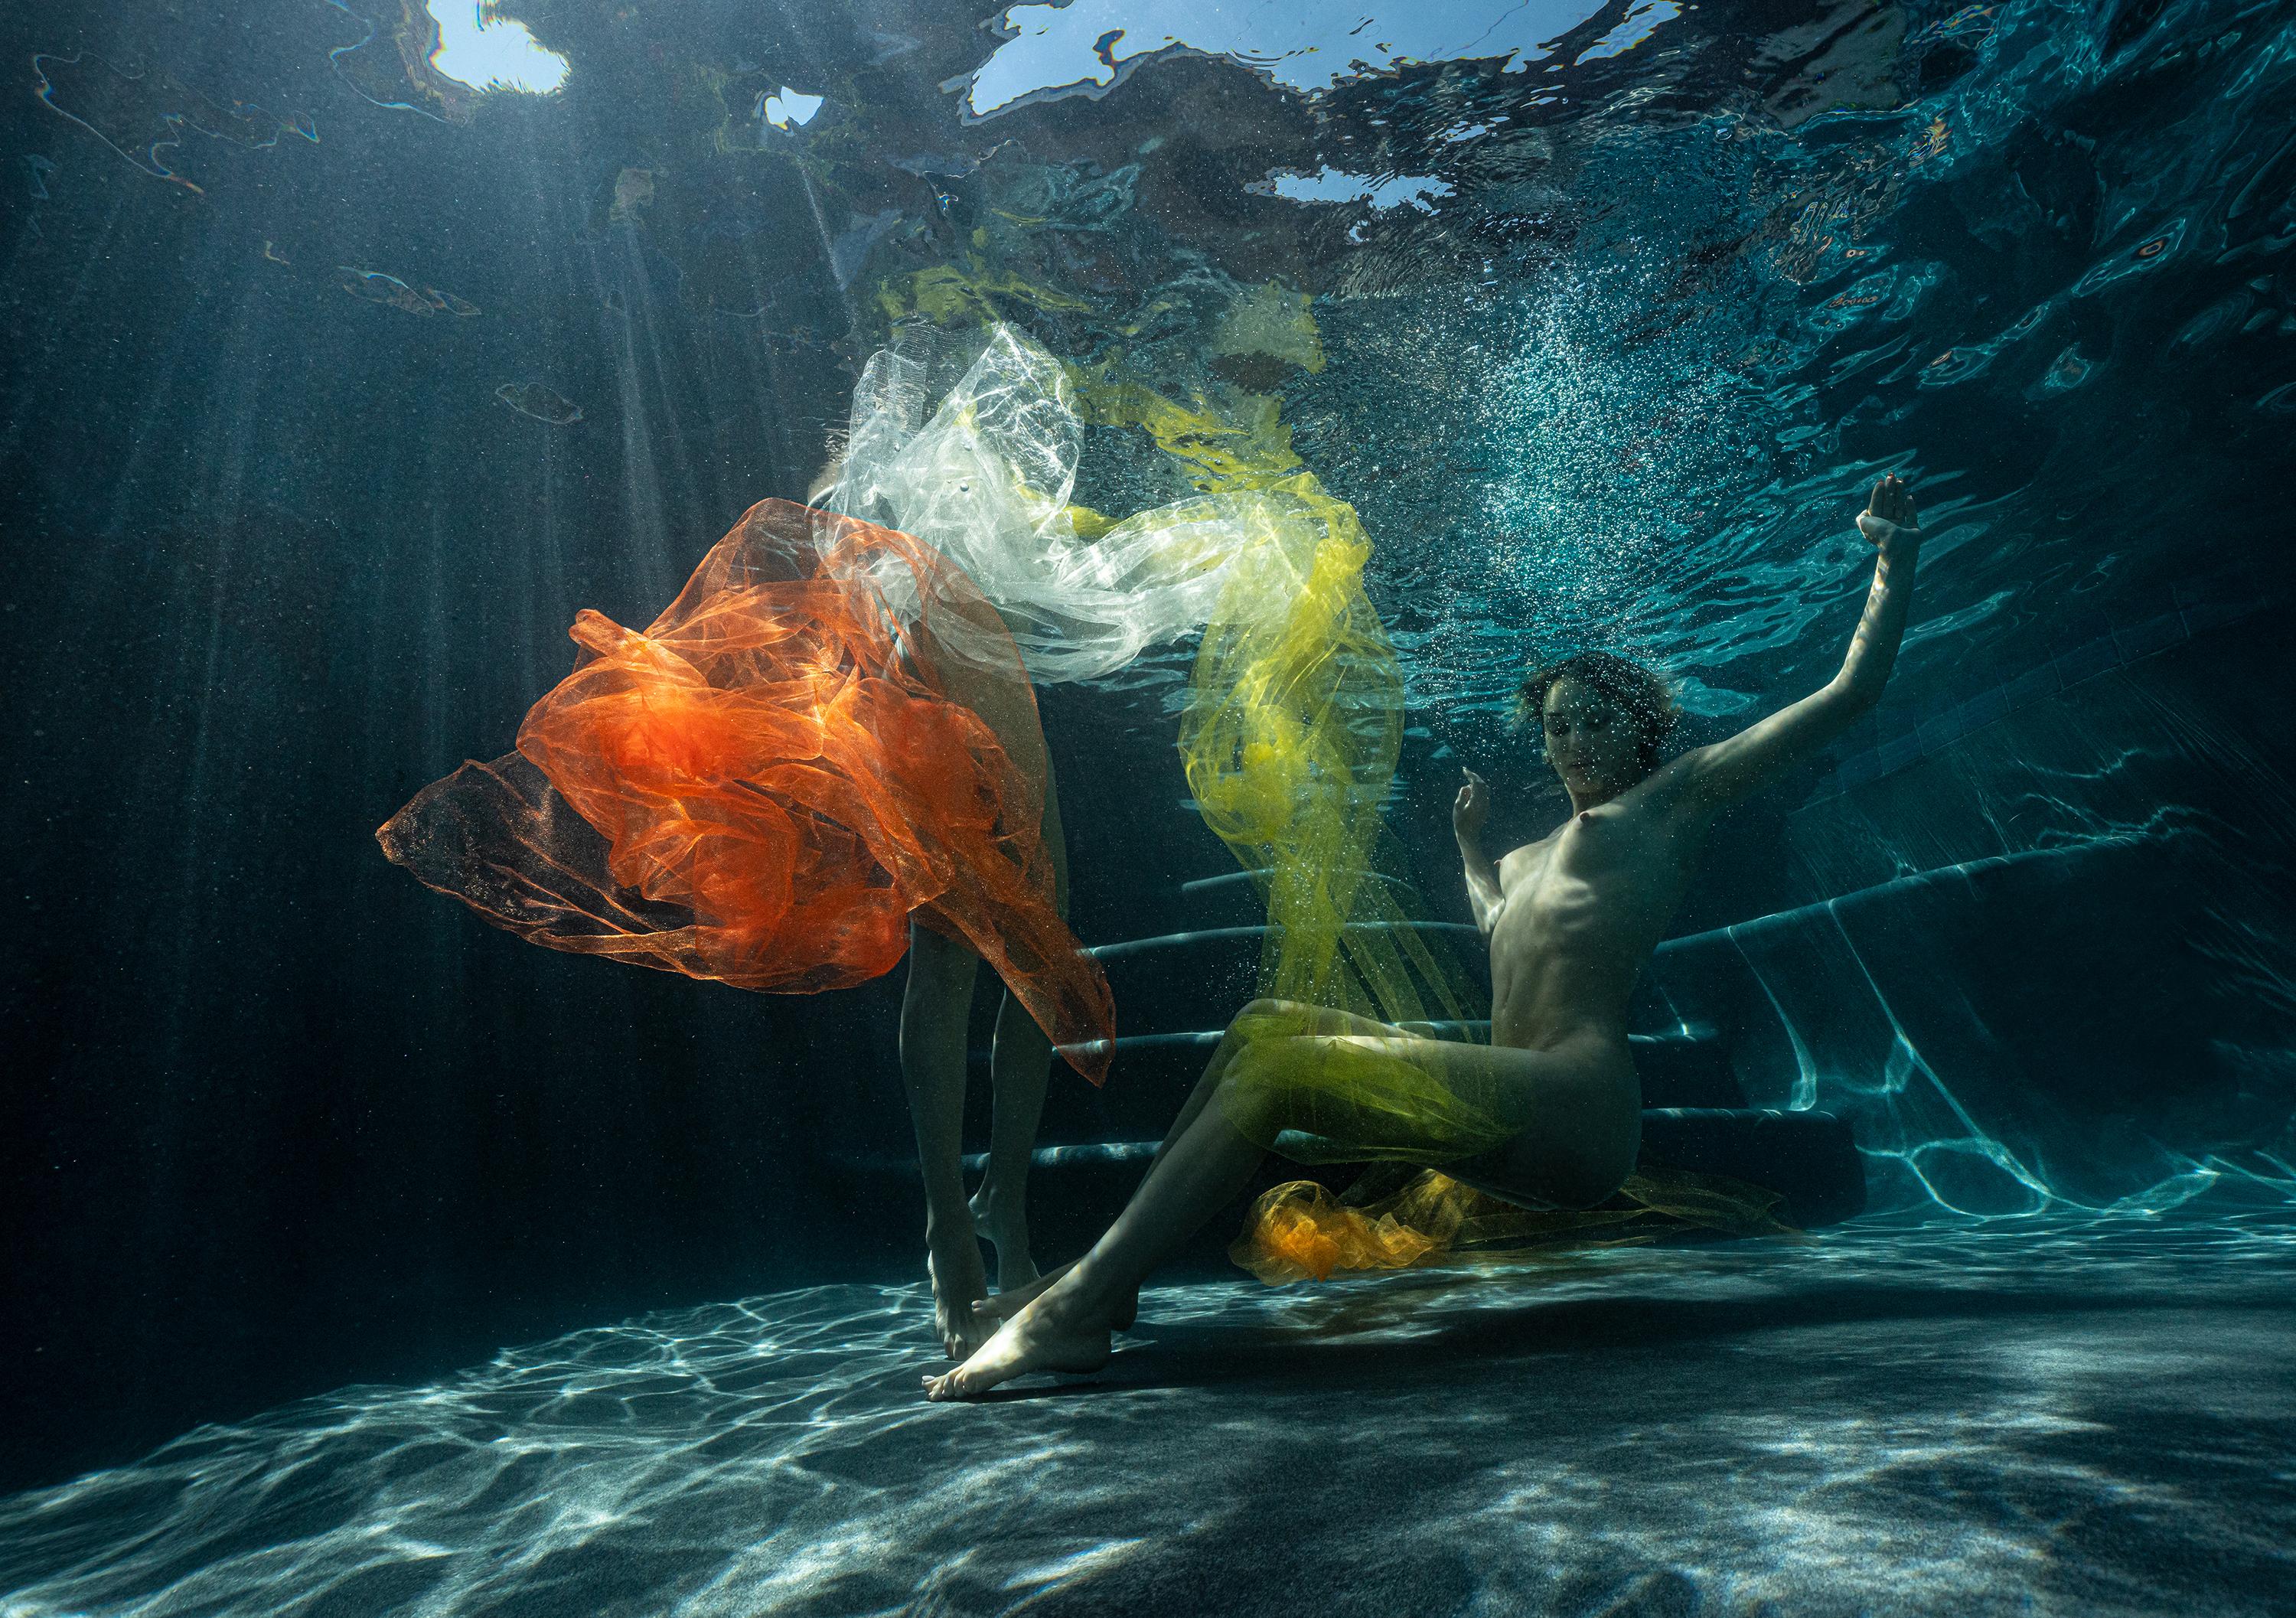 Alex Sher Color Photograph - Pool Party IX - underwater nude photograph - archival pigment print 16x24"